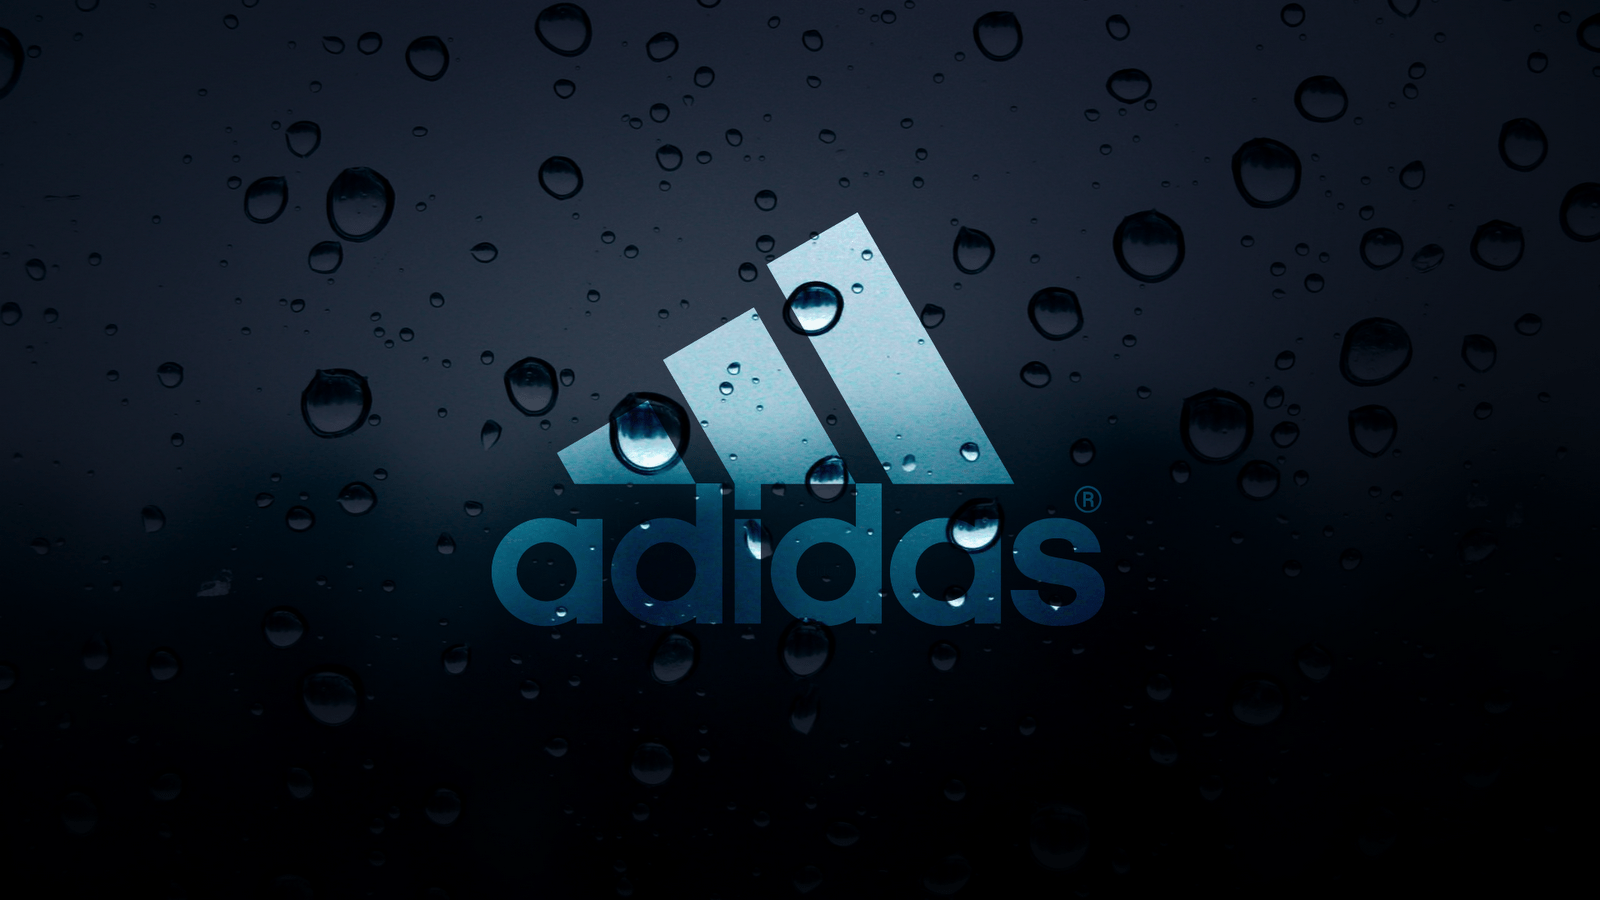 adidas logo hd image